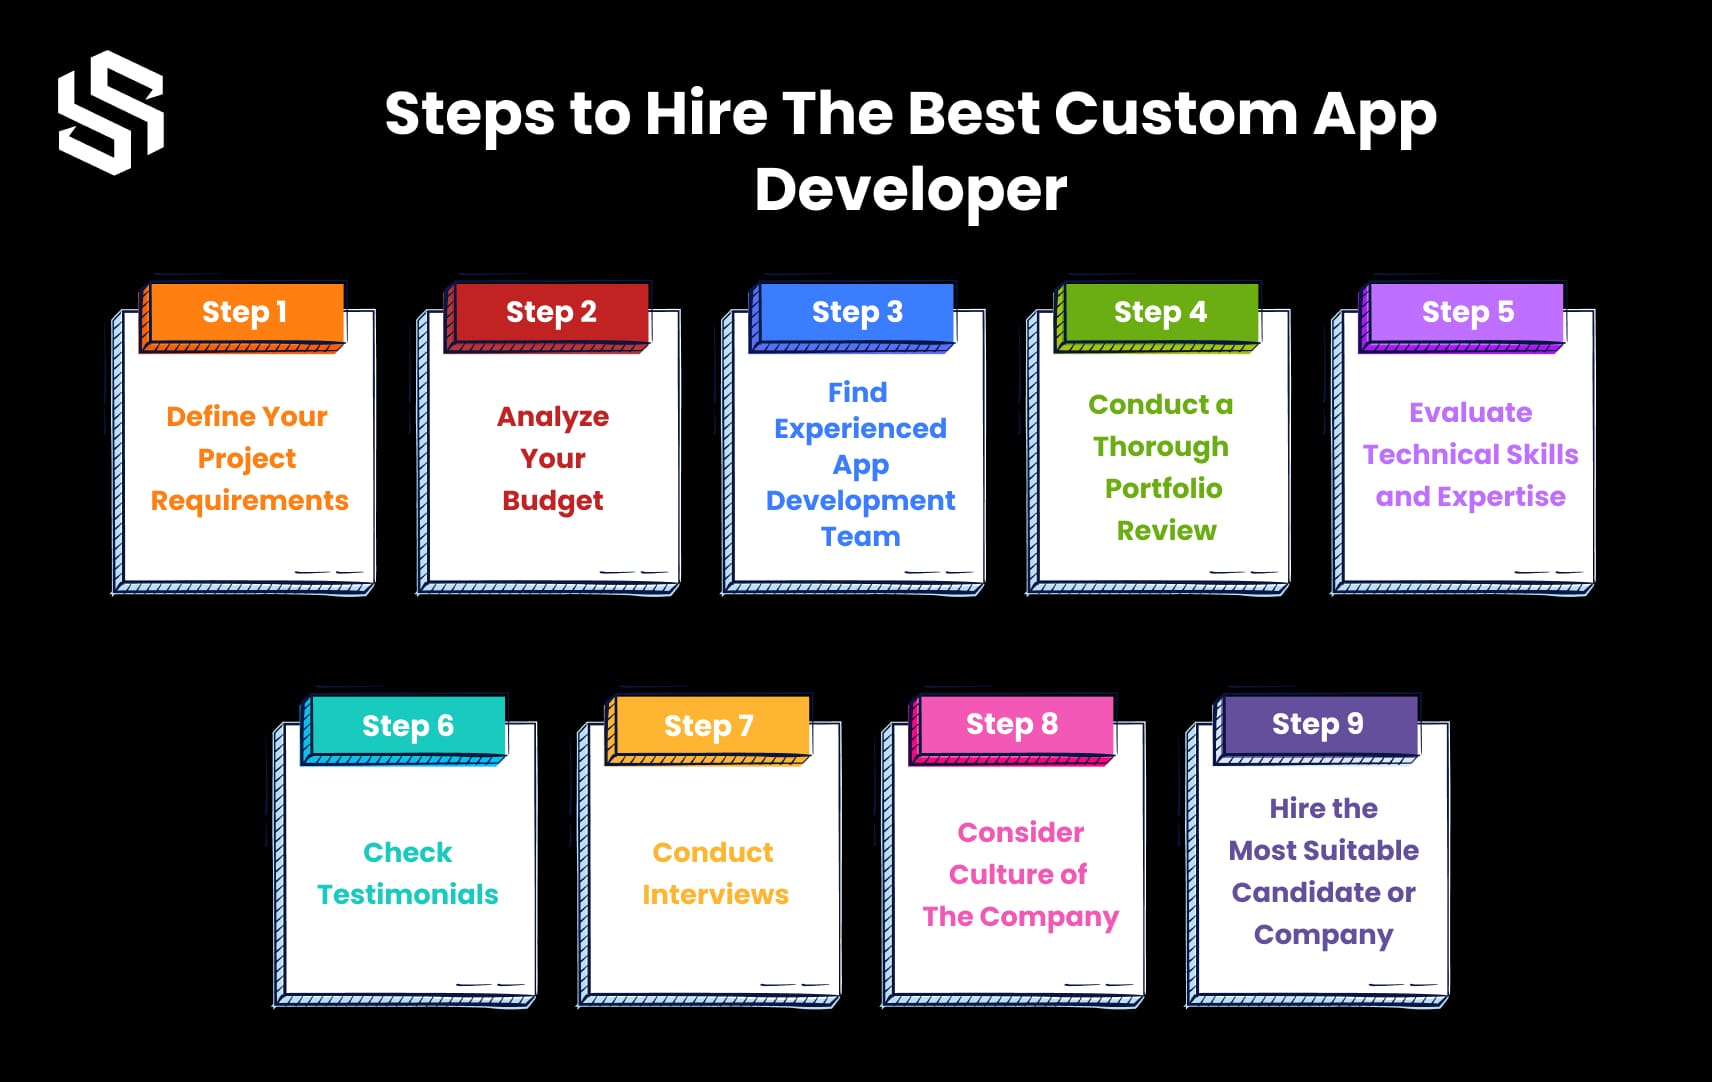 Steps to Hire the Best Custom App Developer